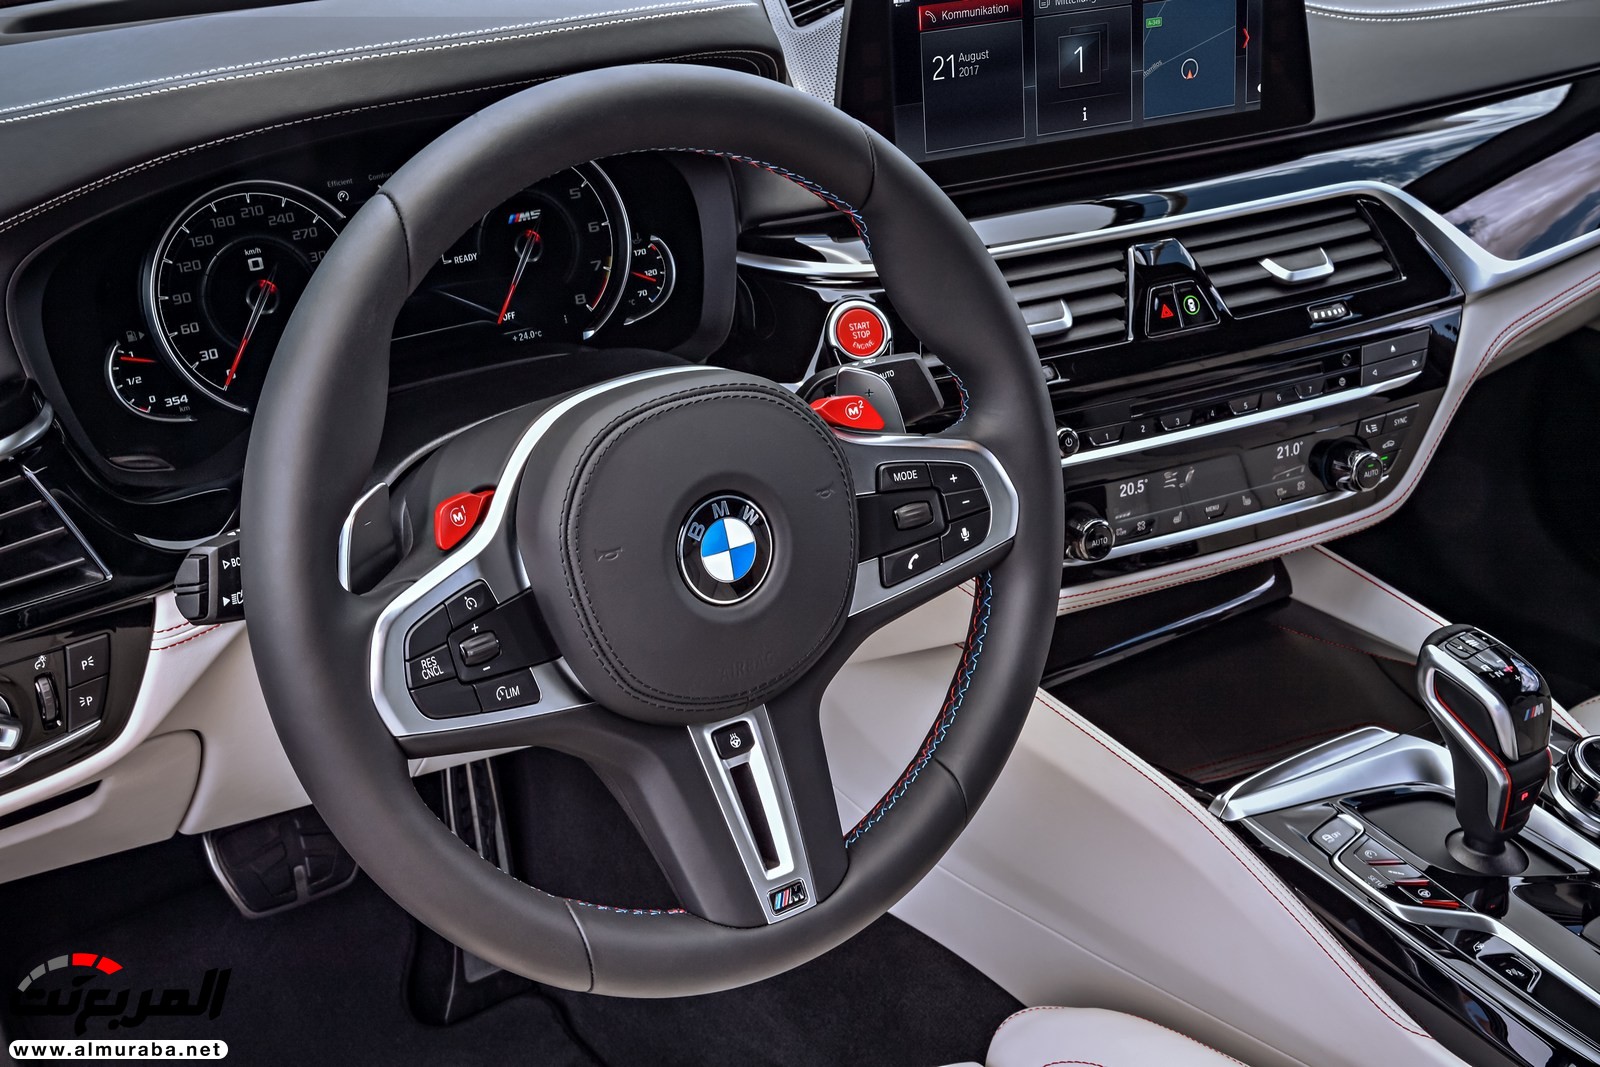 بي ام دبليو M5 2018 تكشف نفسها رسمياً بقوة ٦٠٠ حصان "صور ومواصفات" BMW 201